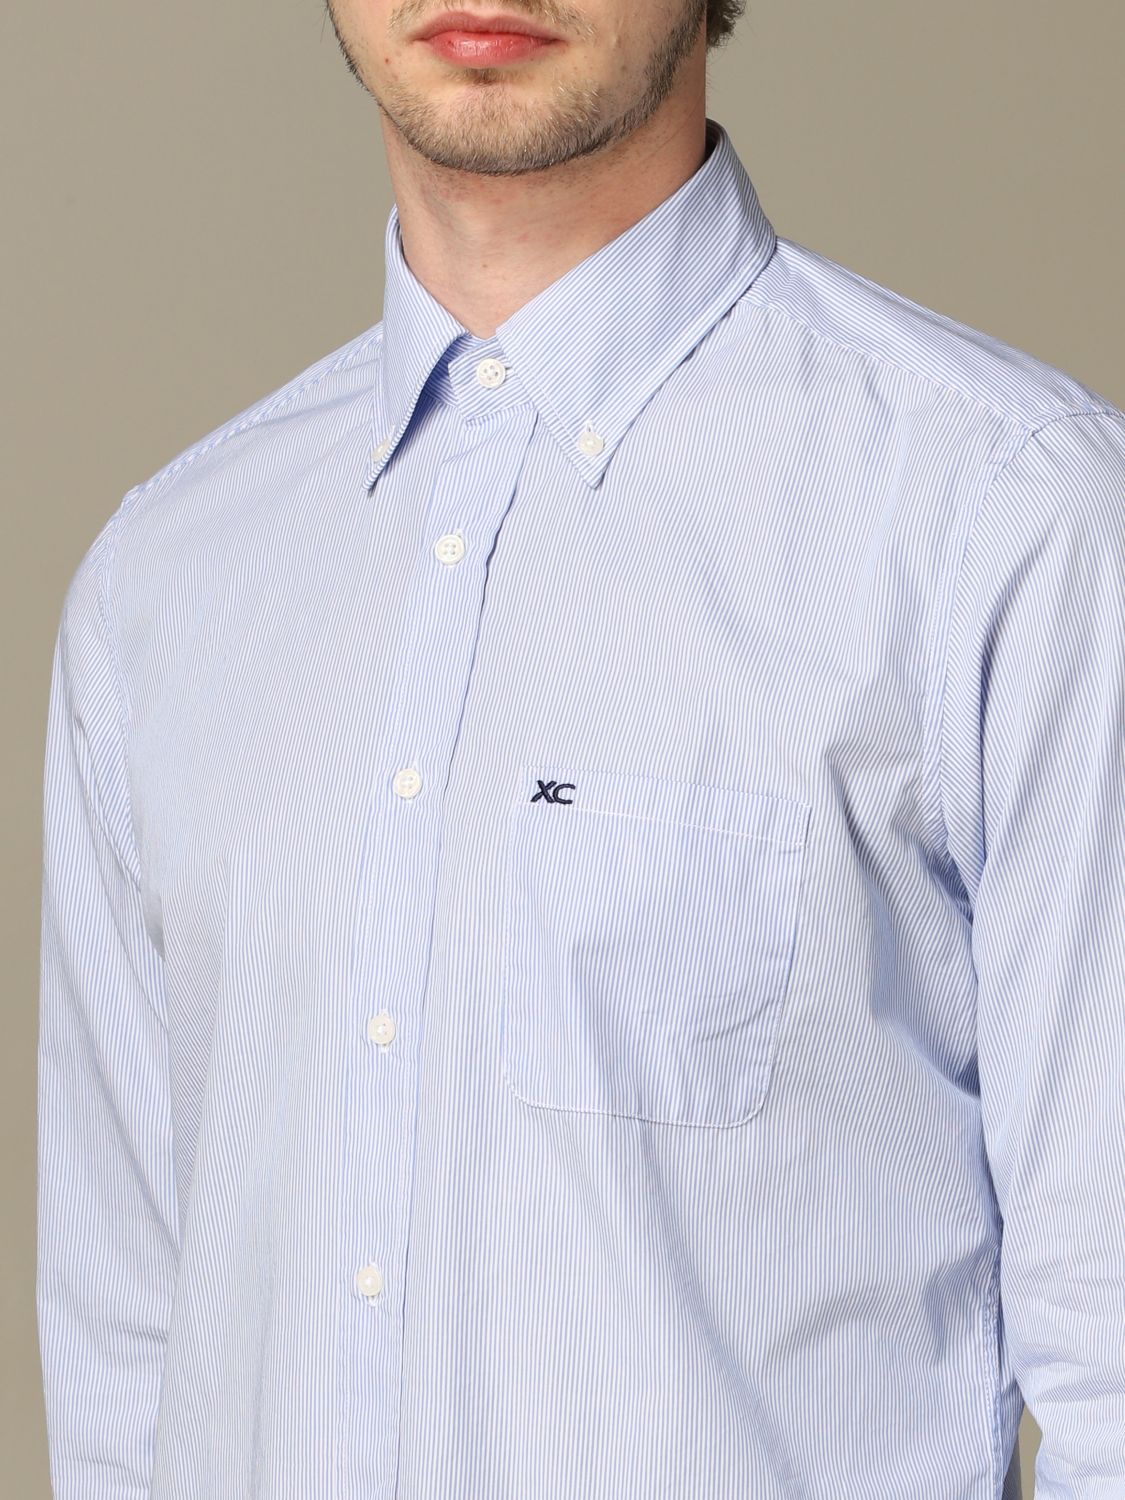 Shirt Xc: Xc shirt for men gnawed blue 3